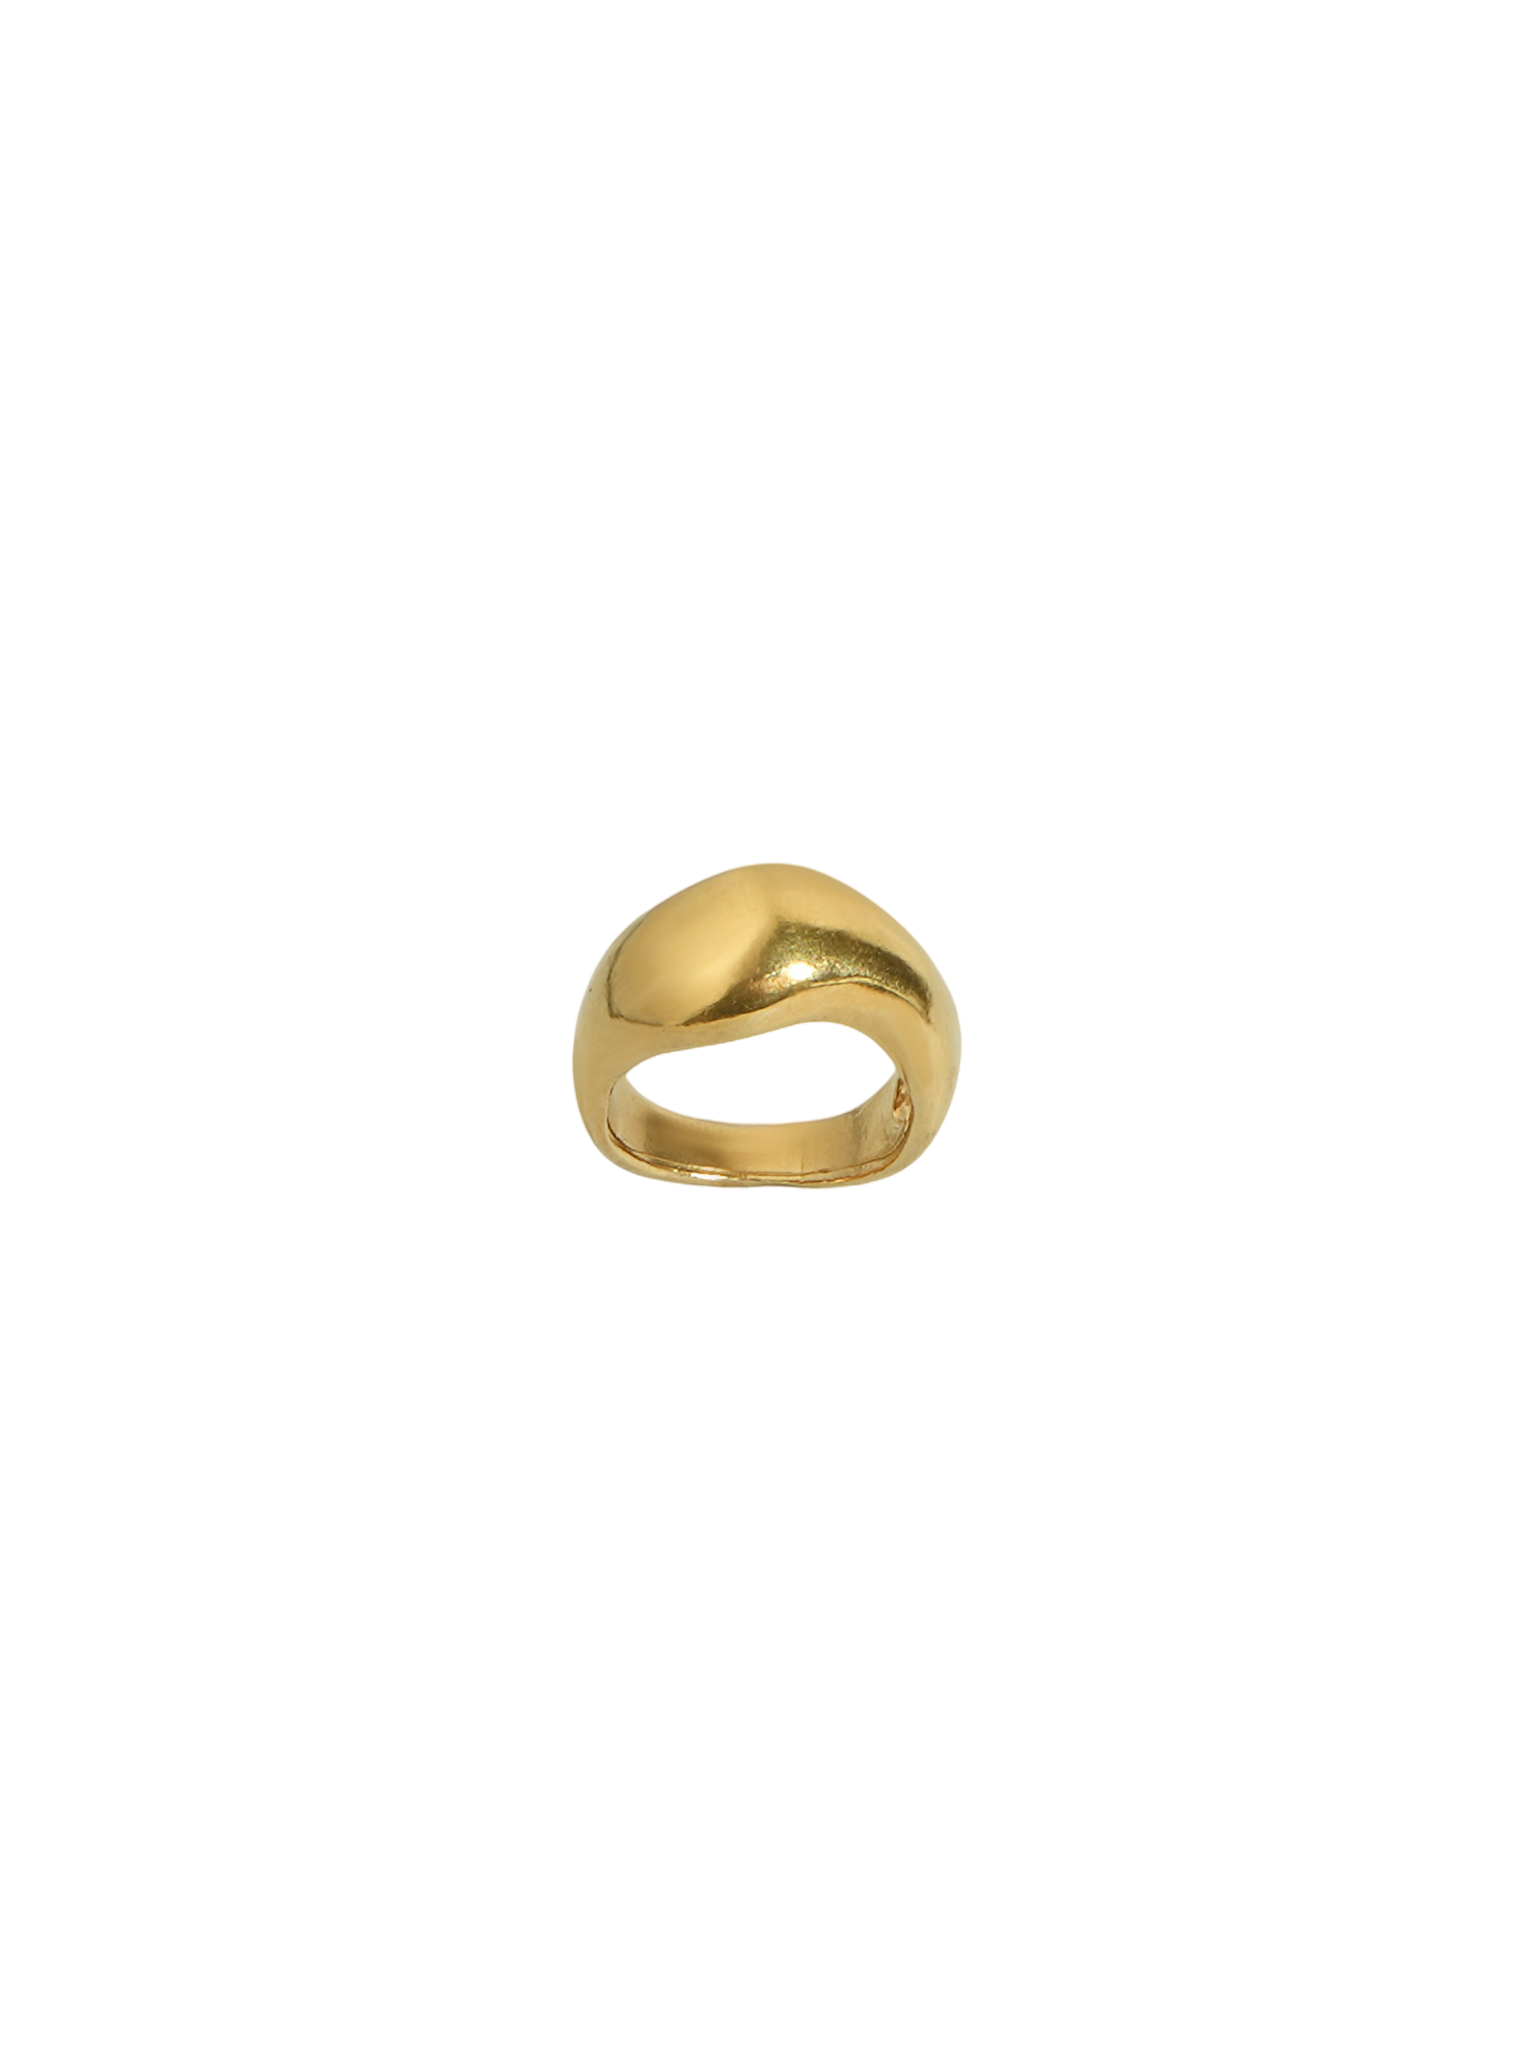 Cigfa ring gold vermeil 